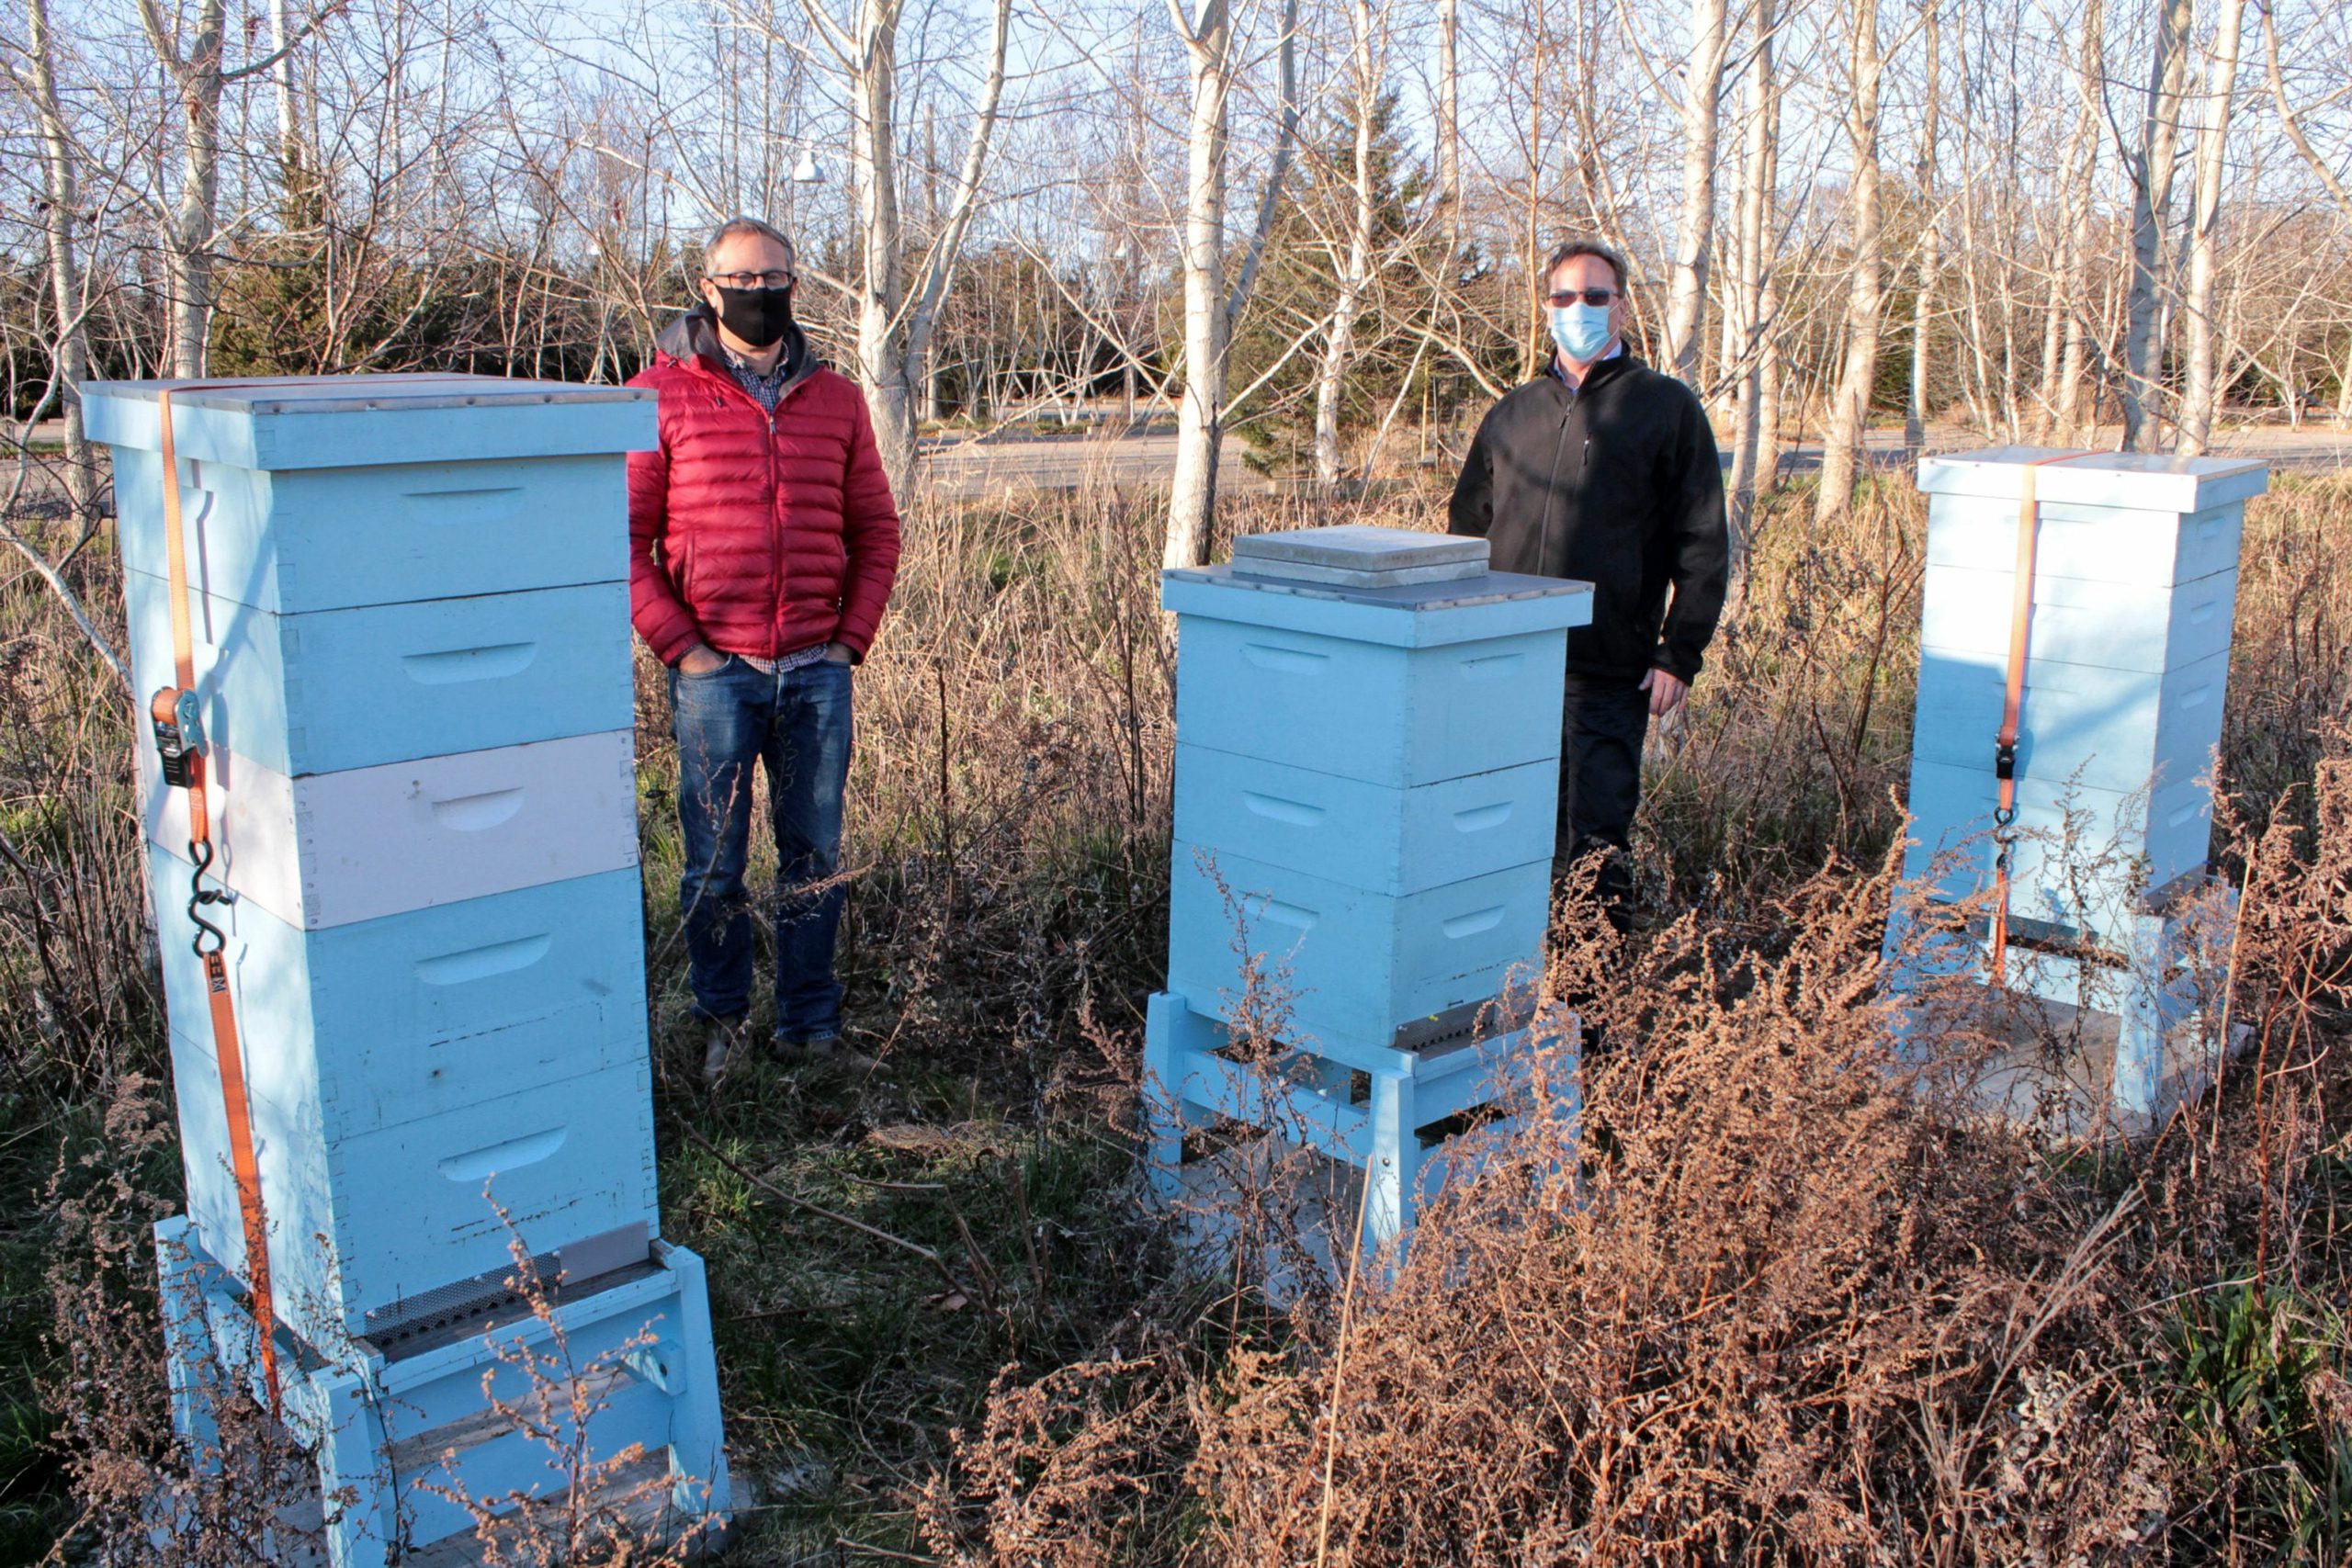 Beekeeper Tony Piazza, left, with Chris Siefert, Interim Director of the Parrish Art Musuem.  